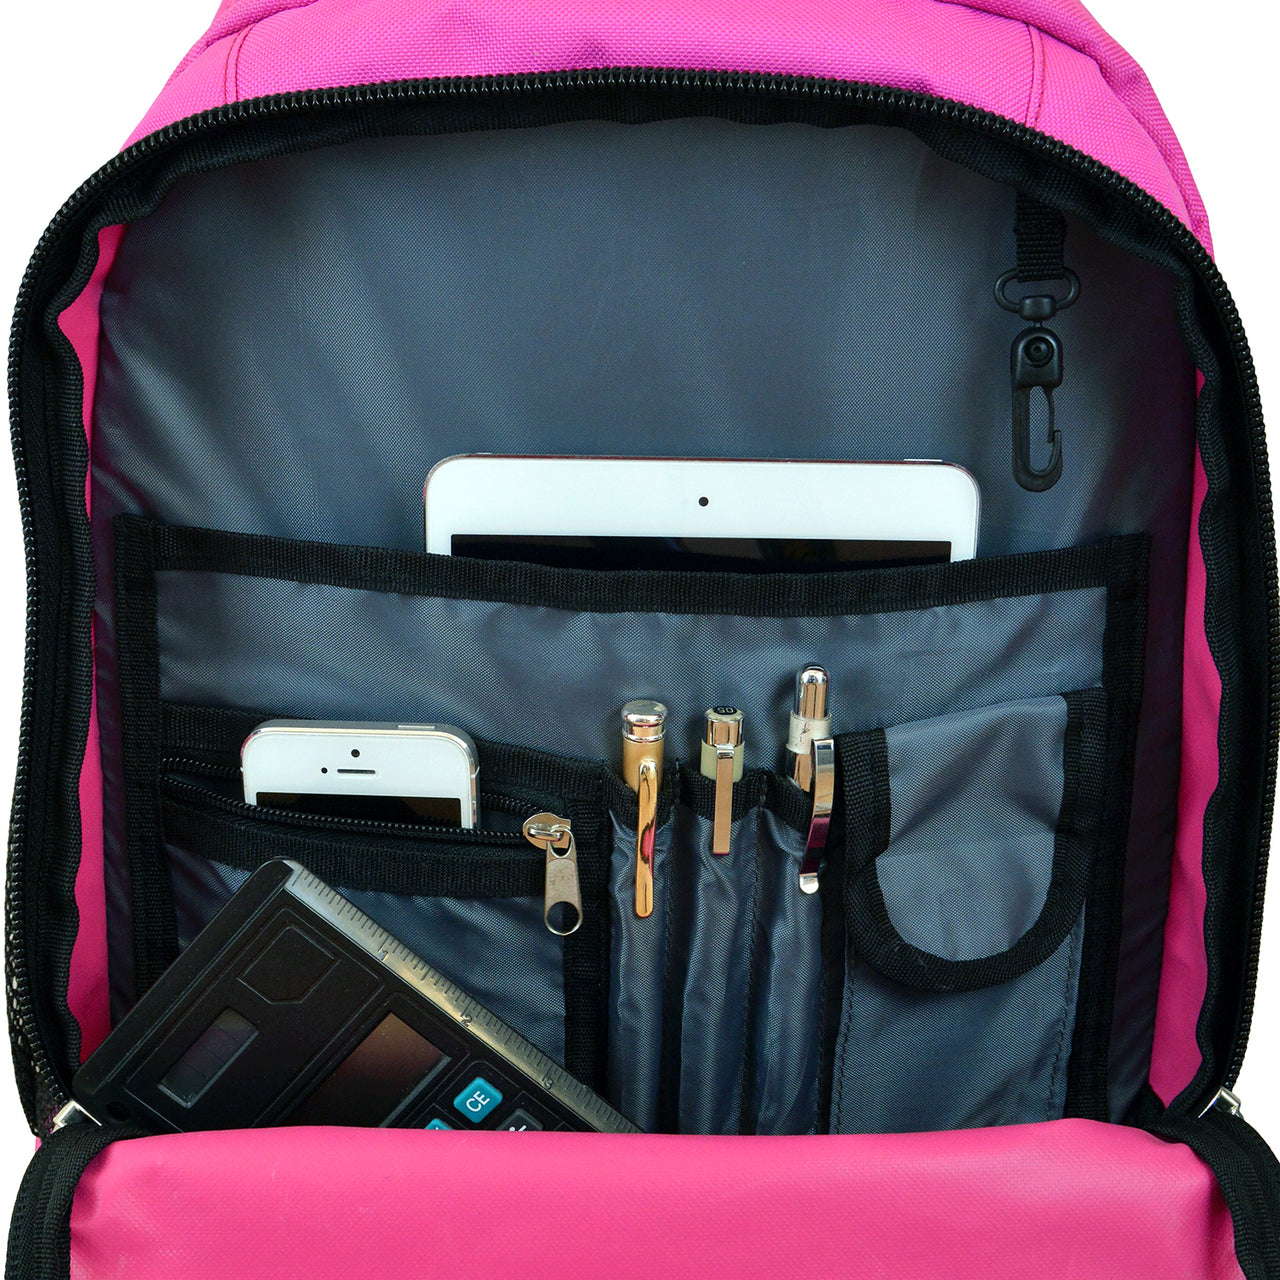 Dallas Mavericks Premium Wheeled Backpack in Pink